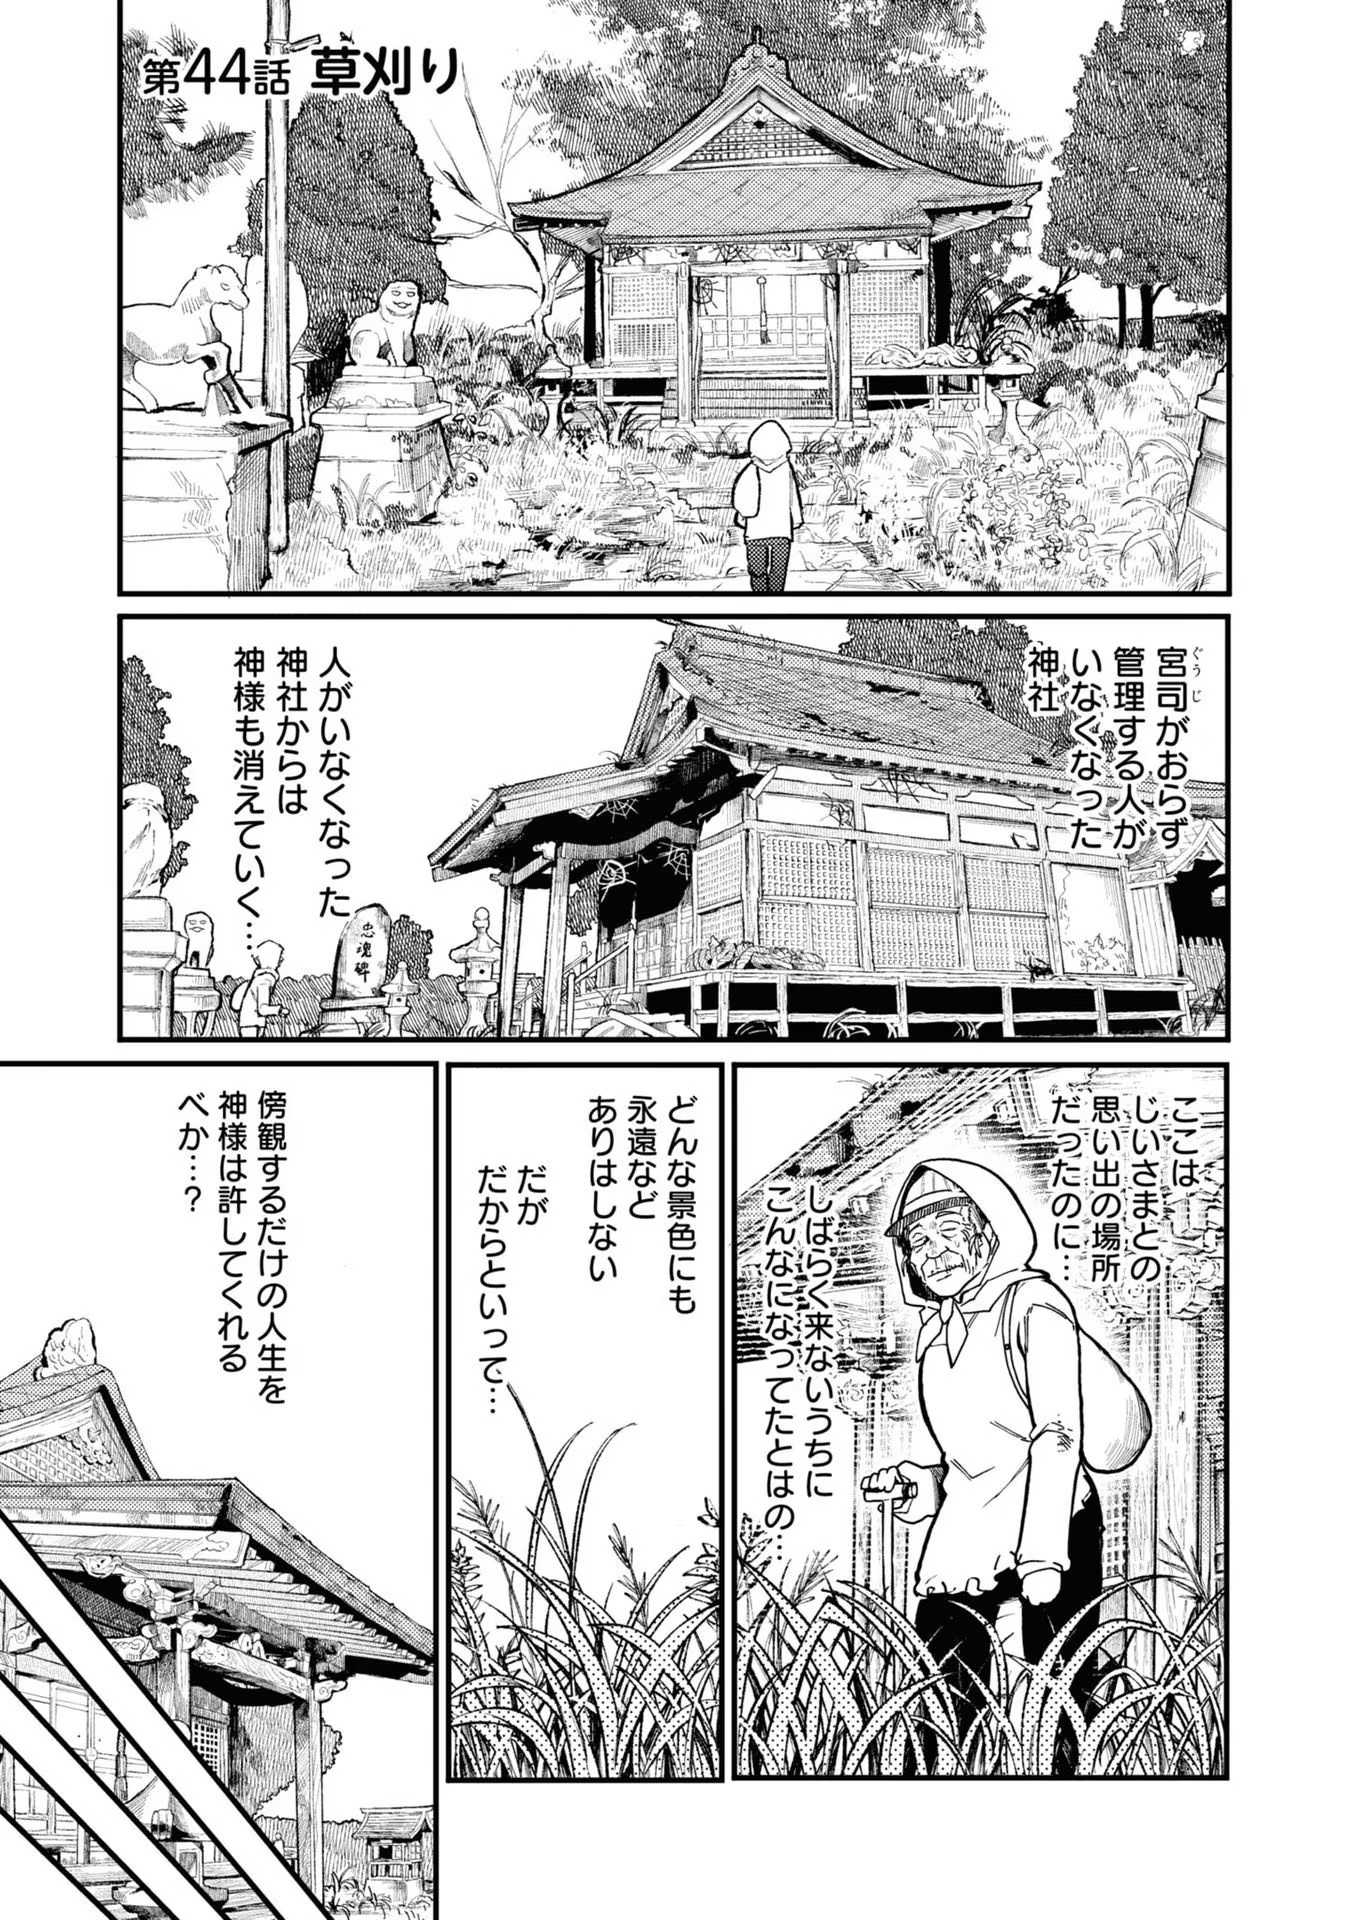 Ojii-san to Obaa-san ga Wakigaetta Hanashi - Chapter 44 - Page 1